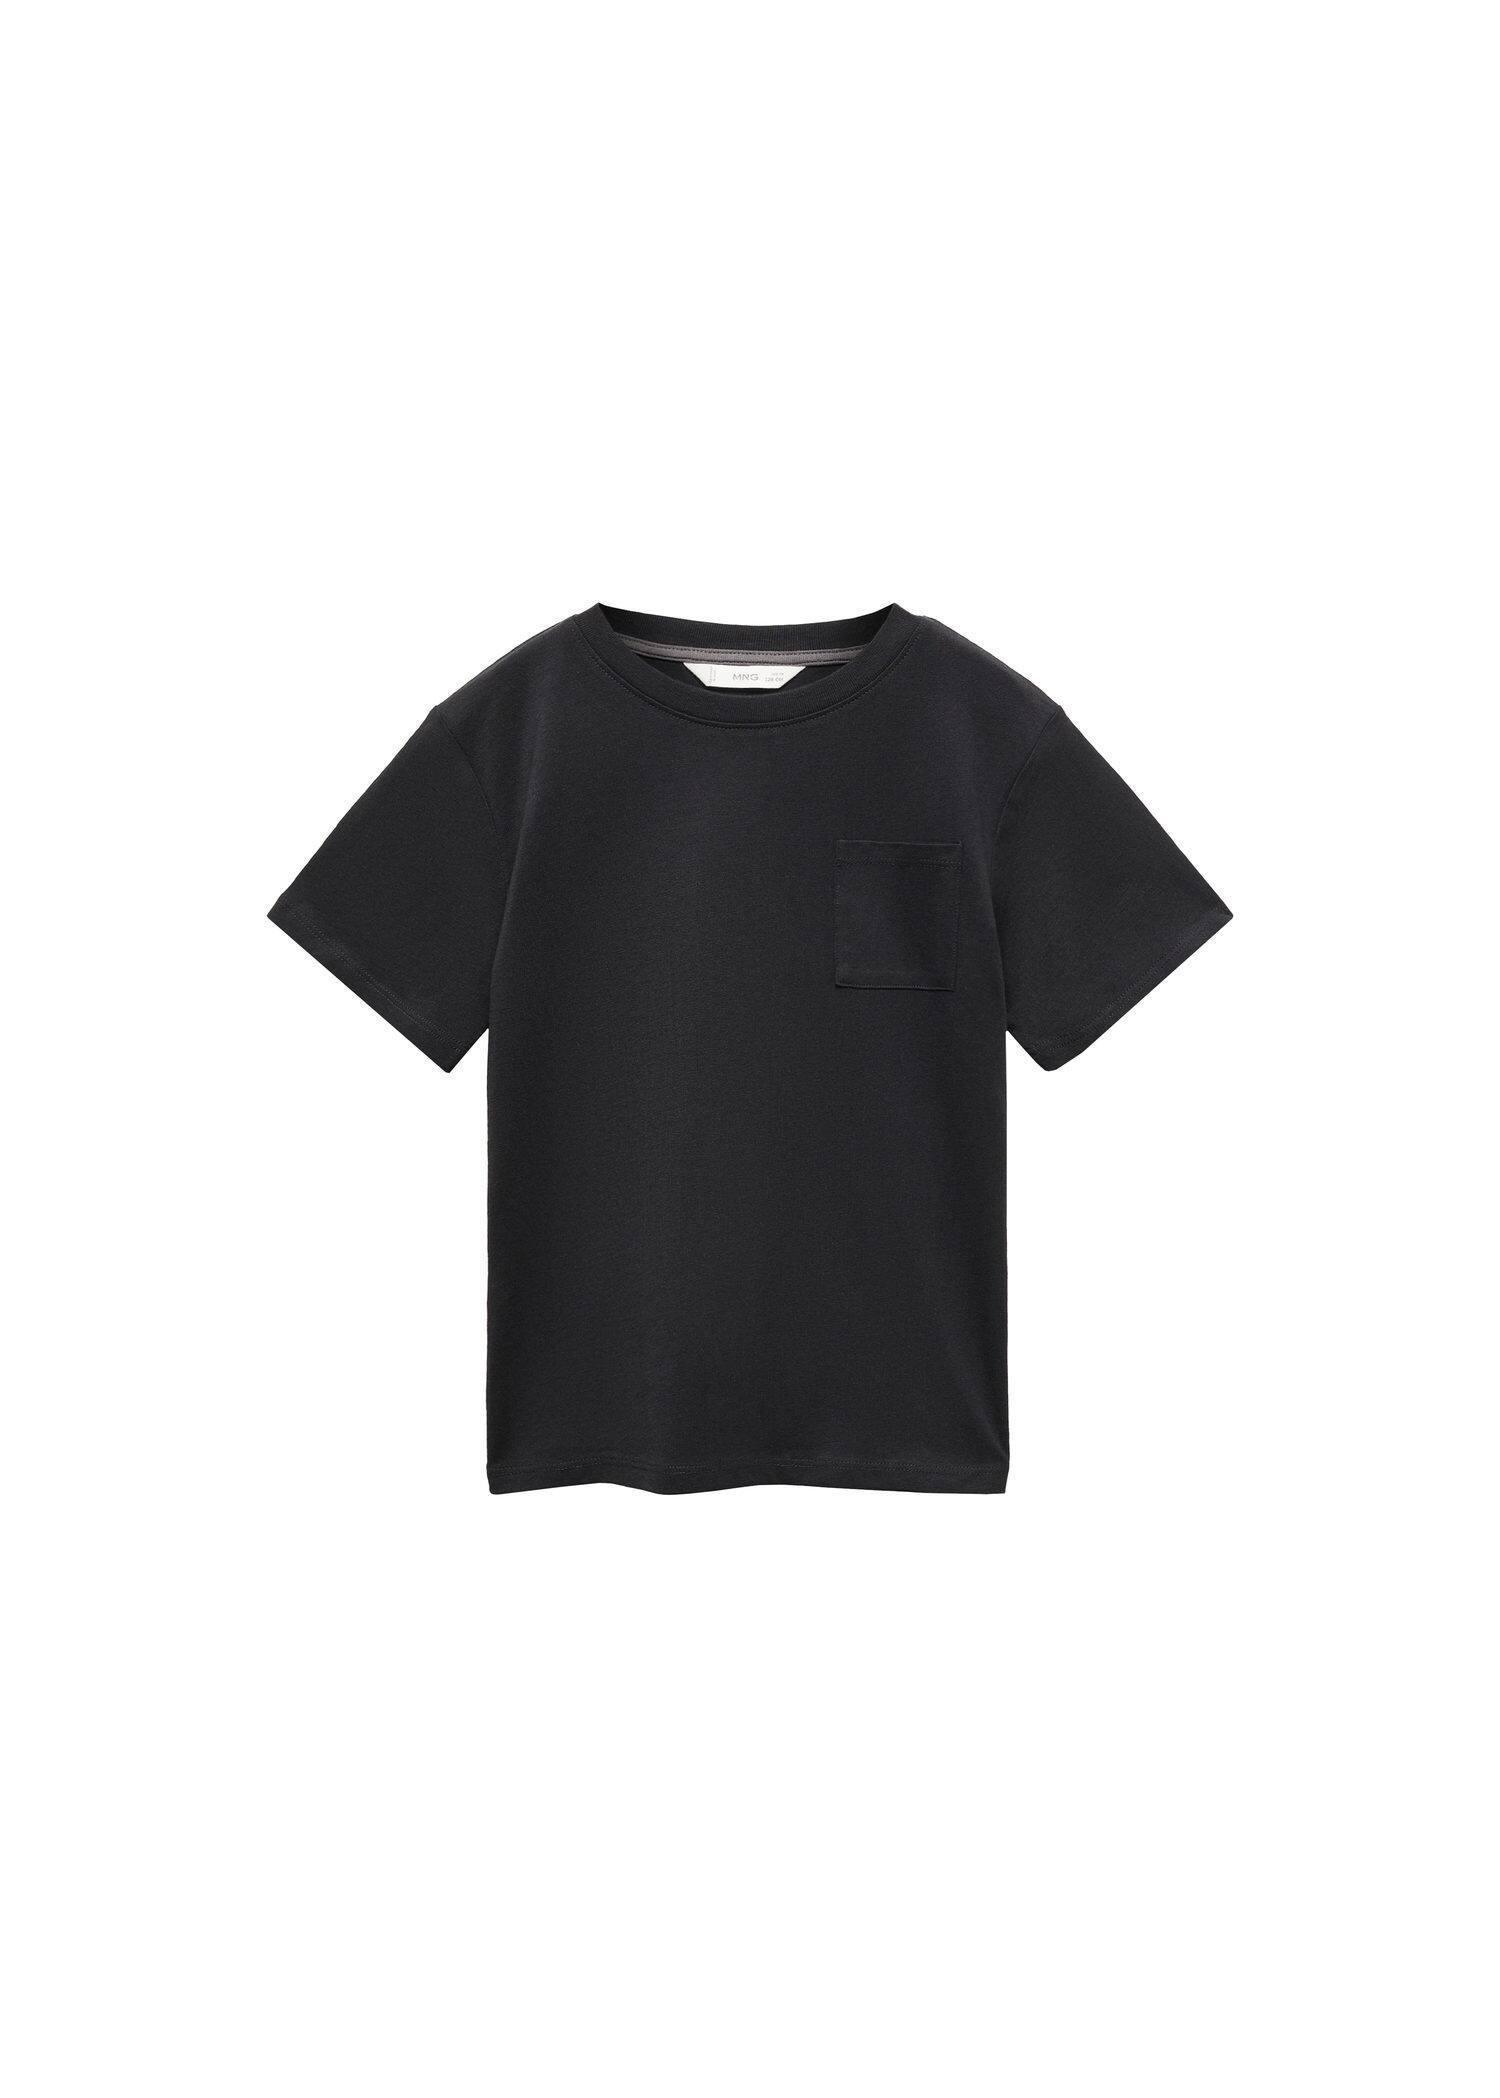 Mango - Black Essential Cotton-Blend T-Shirt, Kids Boys